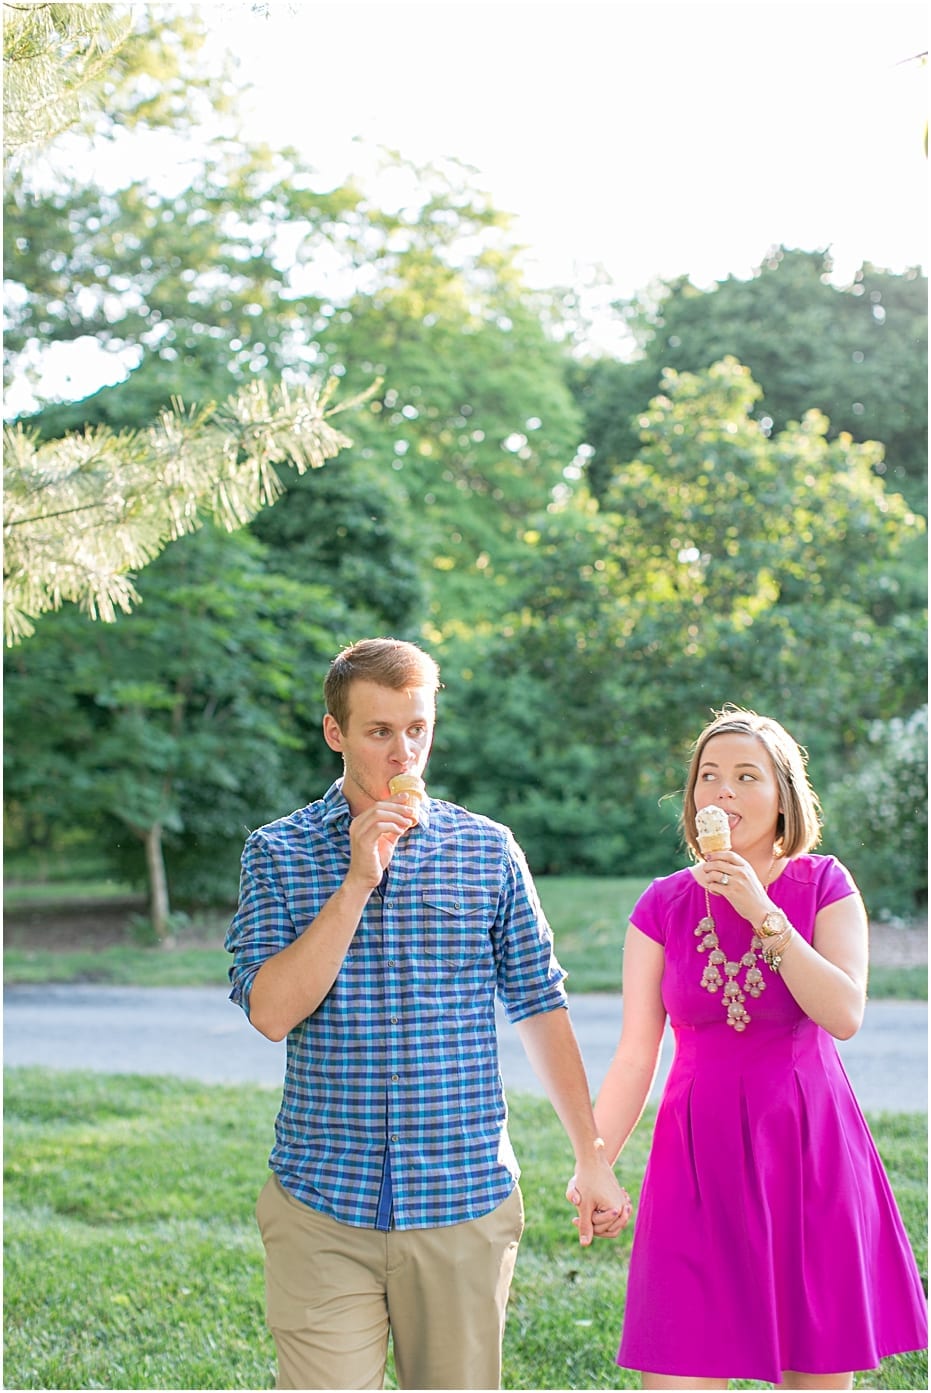 Amanda and Jarrett | A University of Delaware Engagement Shoot